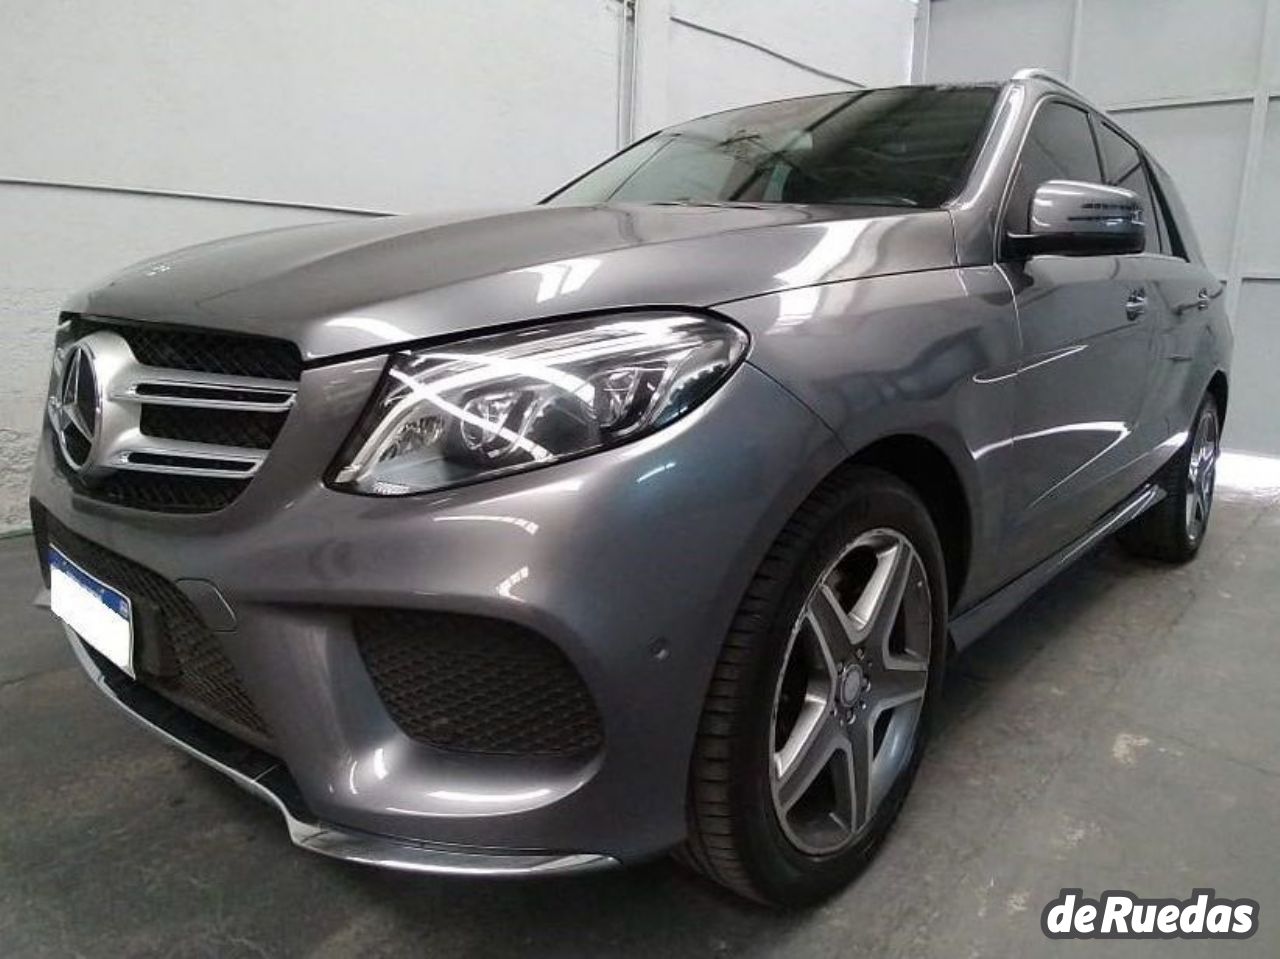 Mercedes Benz Clase GLE Usado en Mendoza, deRuedas